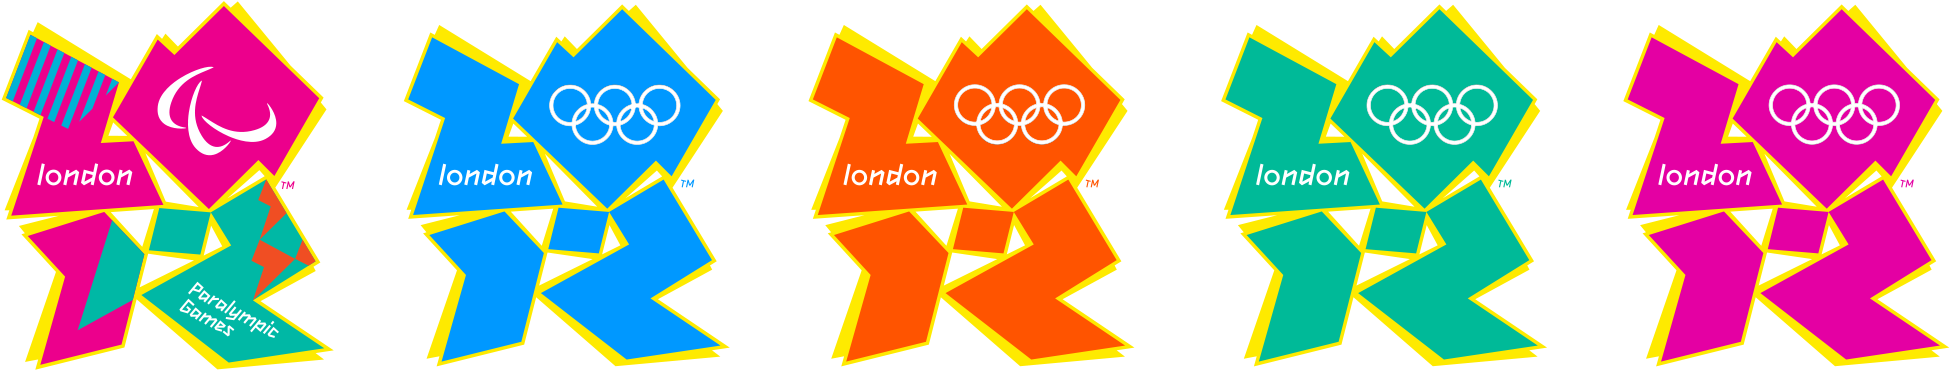 2012 London Olympic Official Logo - London 2012 (2000x443)